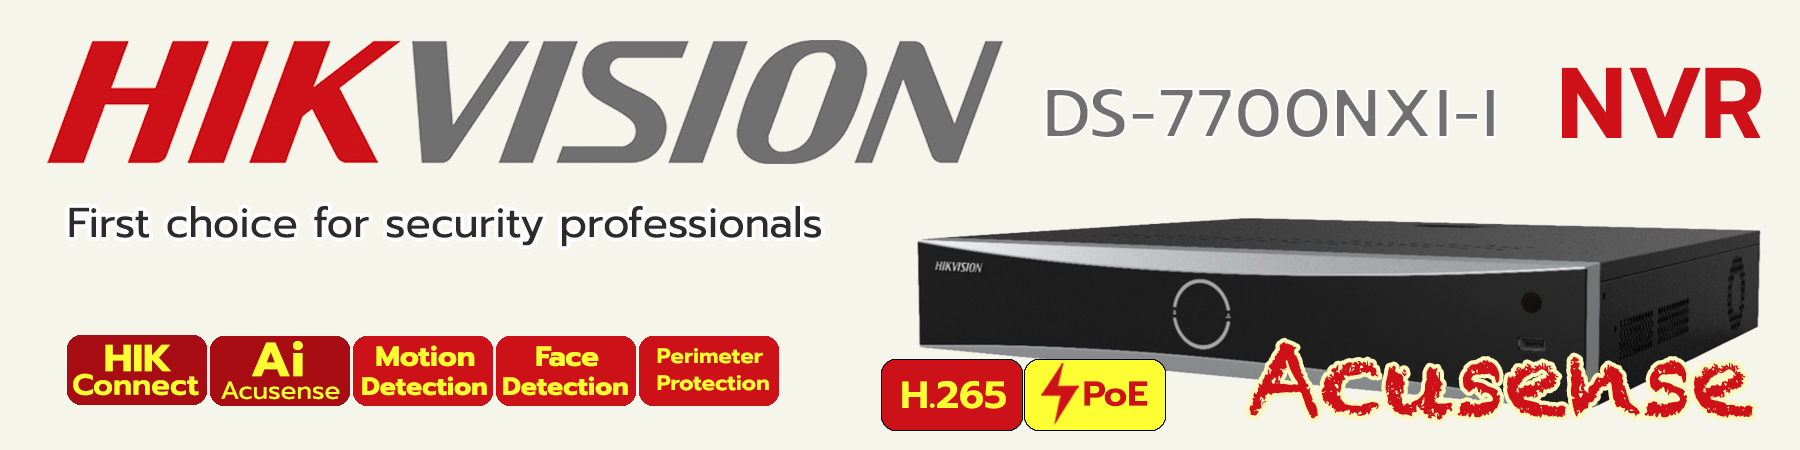 Hikvision Acusense NVR, Hikvision Acusense Network Video Recorder, DS-7716NXI-I4/S, DS-7716NXI-I4/16P/S, DS-7732NXI-I4/S, DS-7732NXI-I4/16P/S